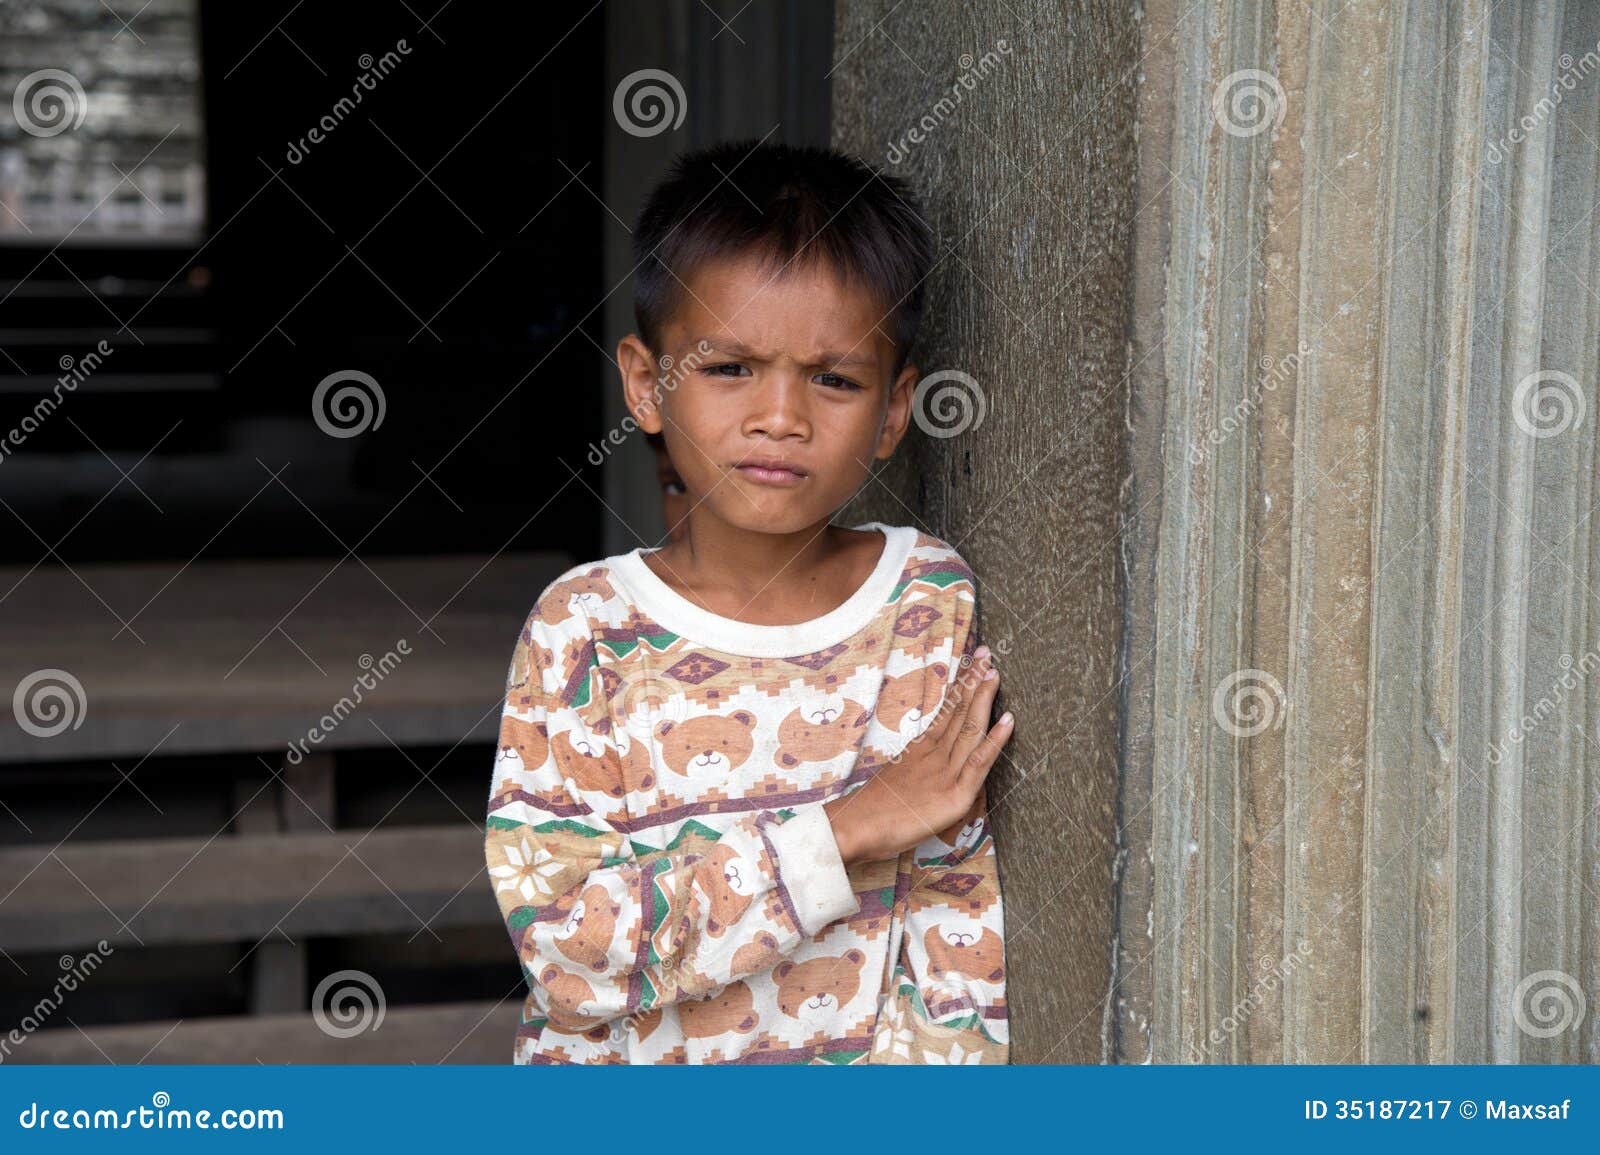 Little Asian Boy With Bottle Of Water Posing In Angkor Wat 